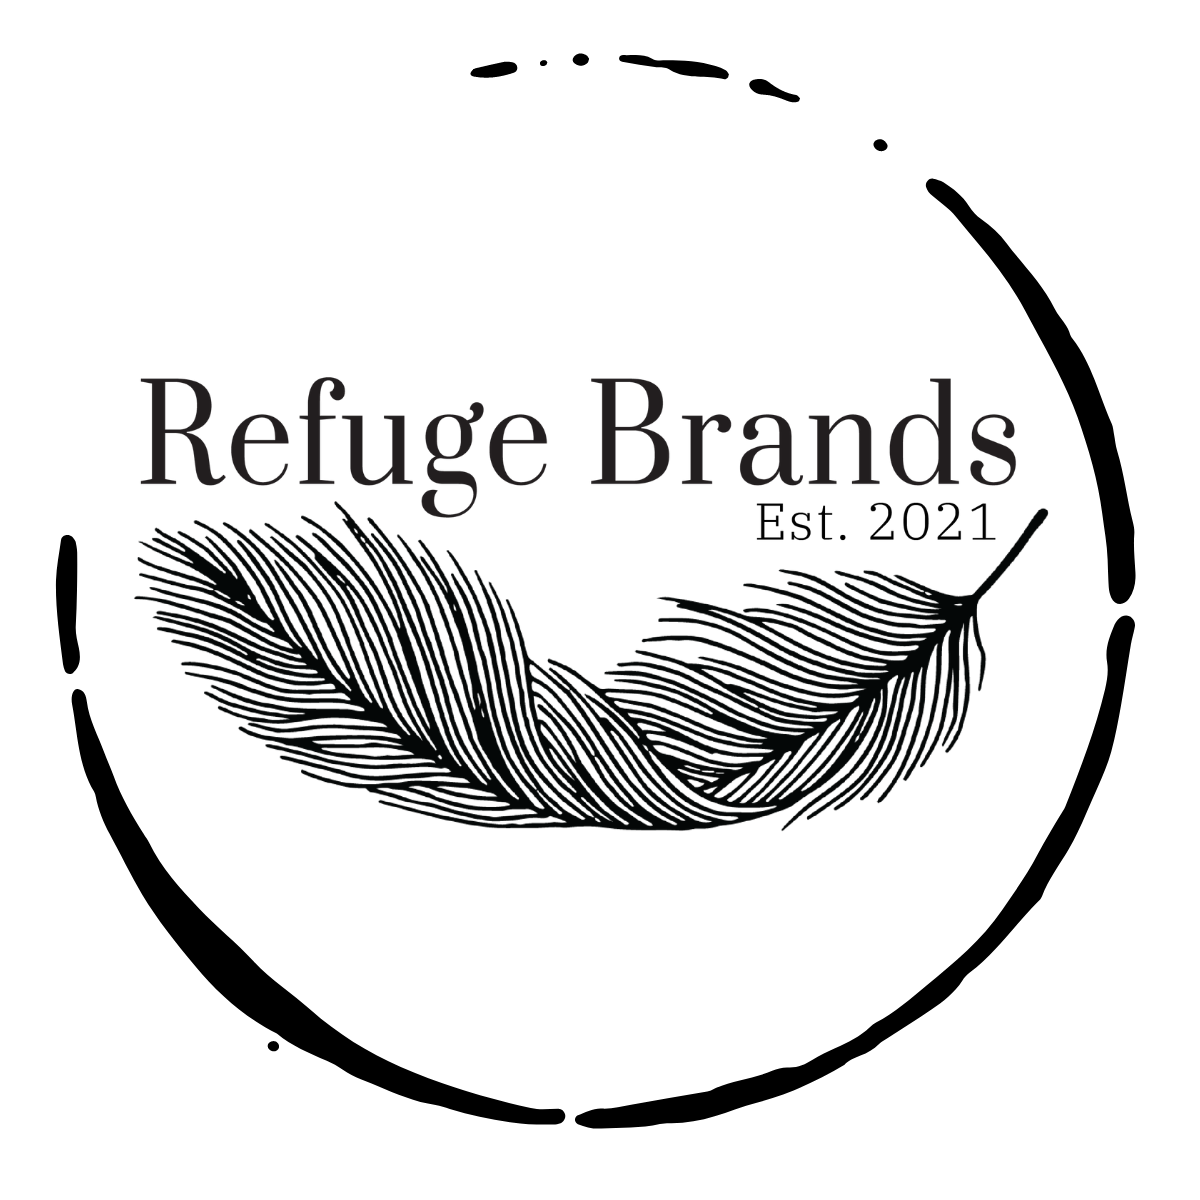 Gift Cards by Refuge Brands